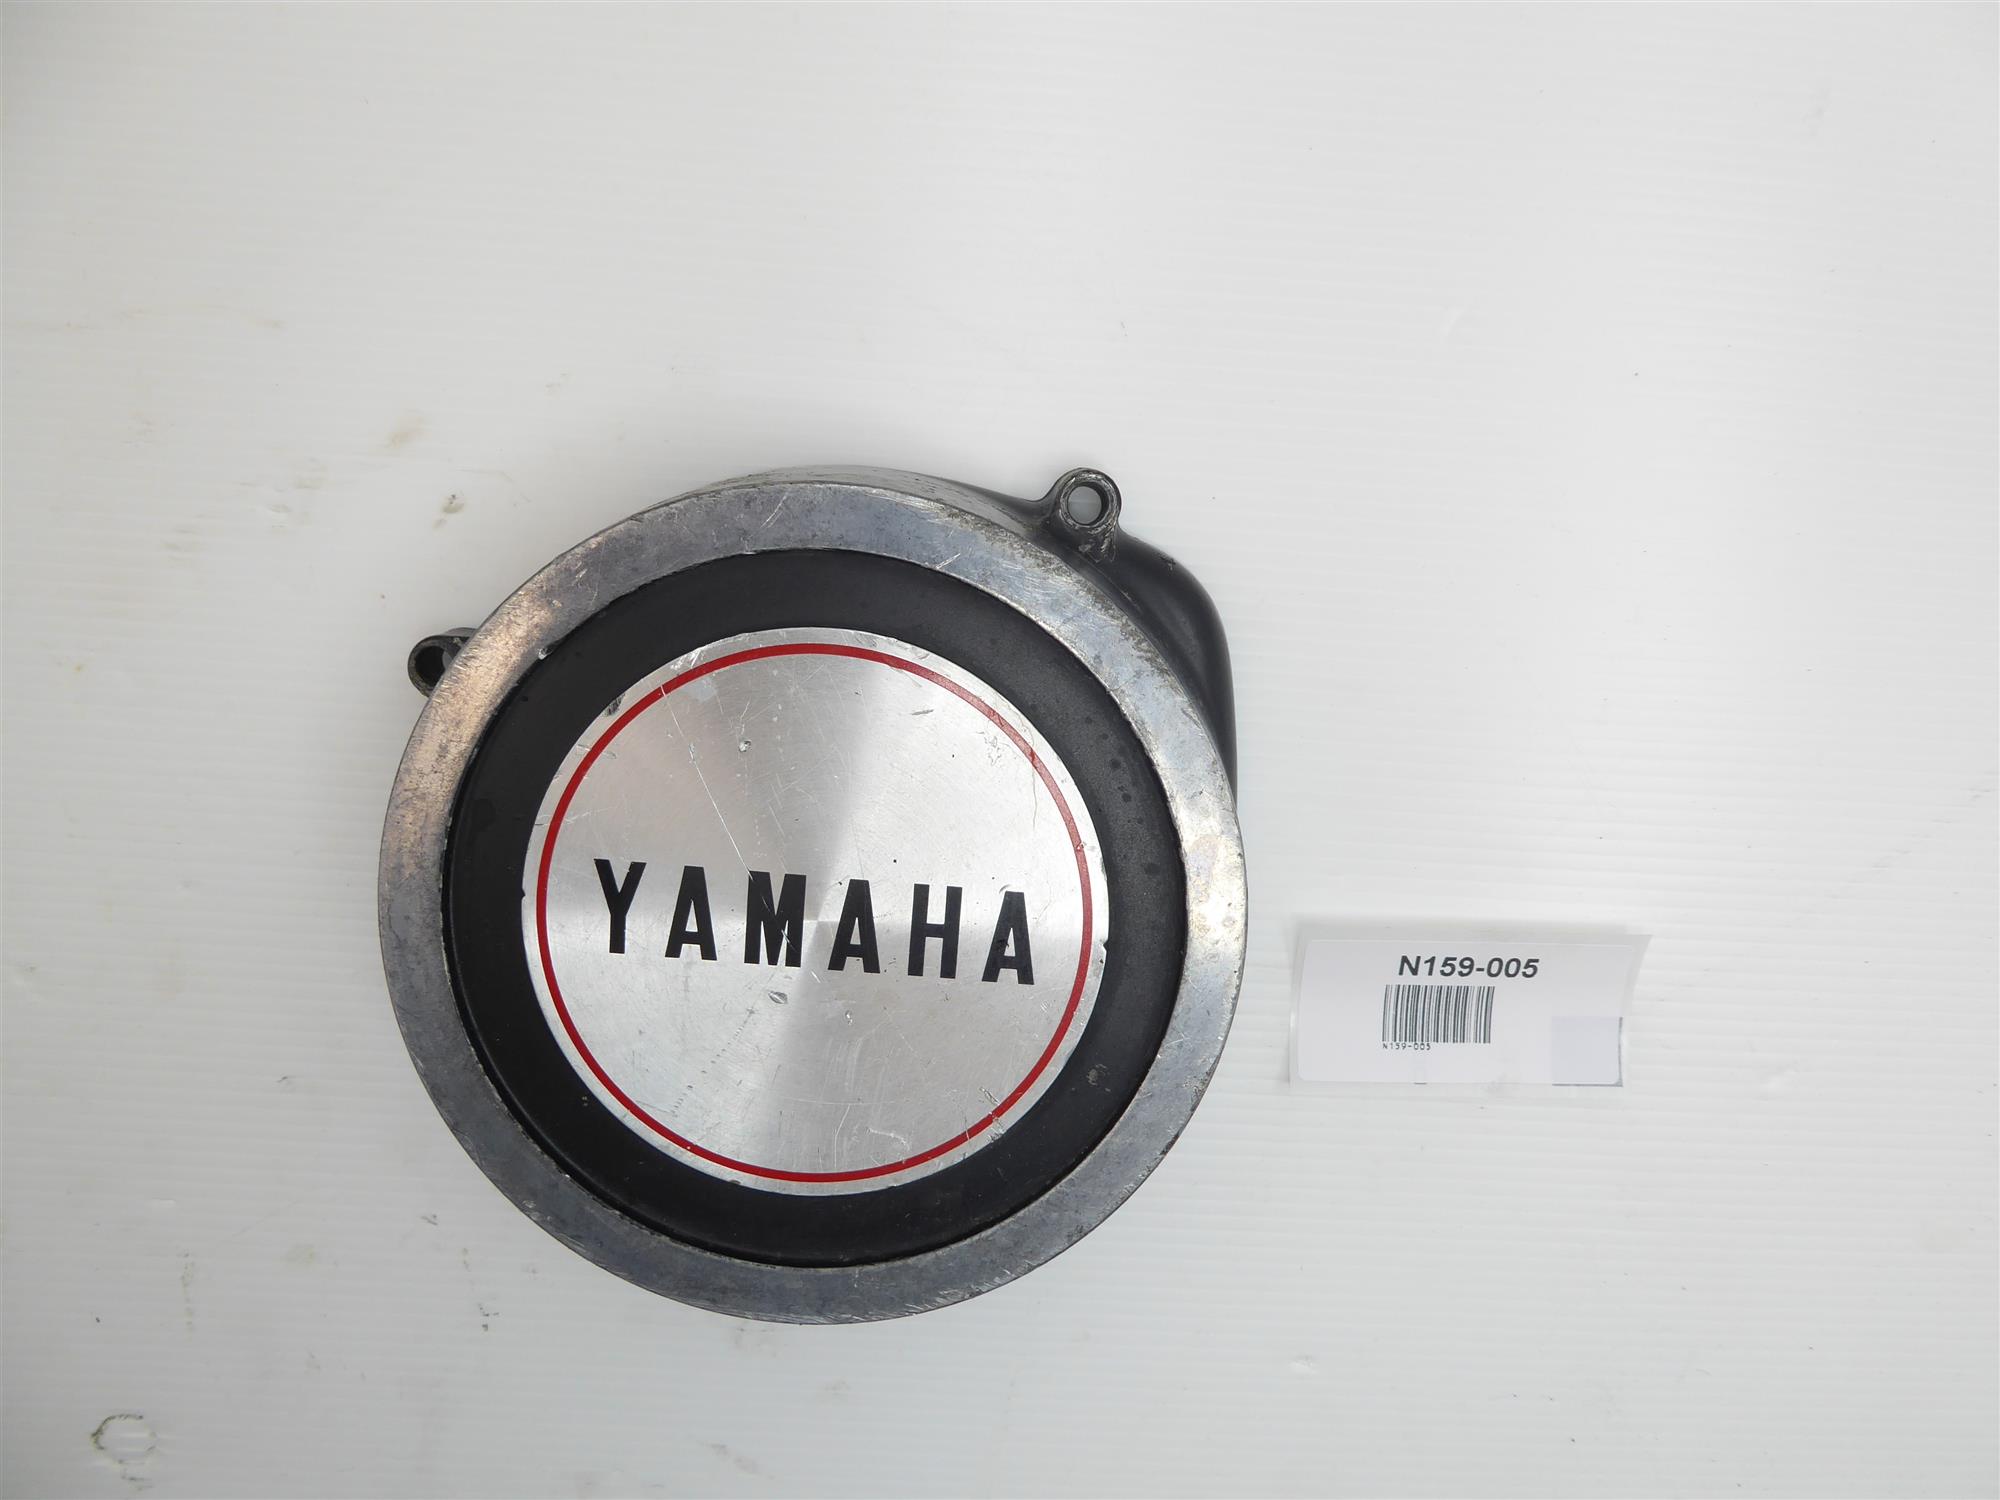 Yamaha RD 250 73-79 Lichtmaschinenabdeckung 360-15415-01-00